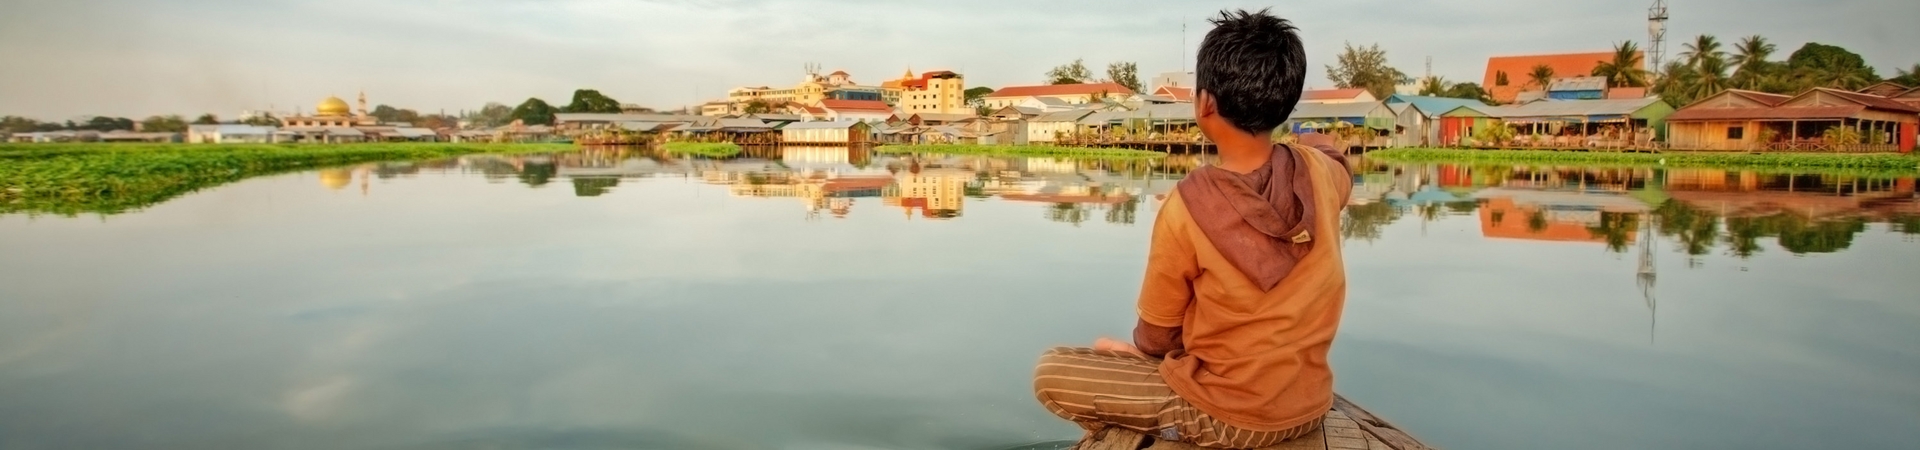 Travel Cambodia The Sustainable Way